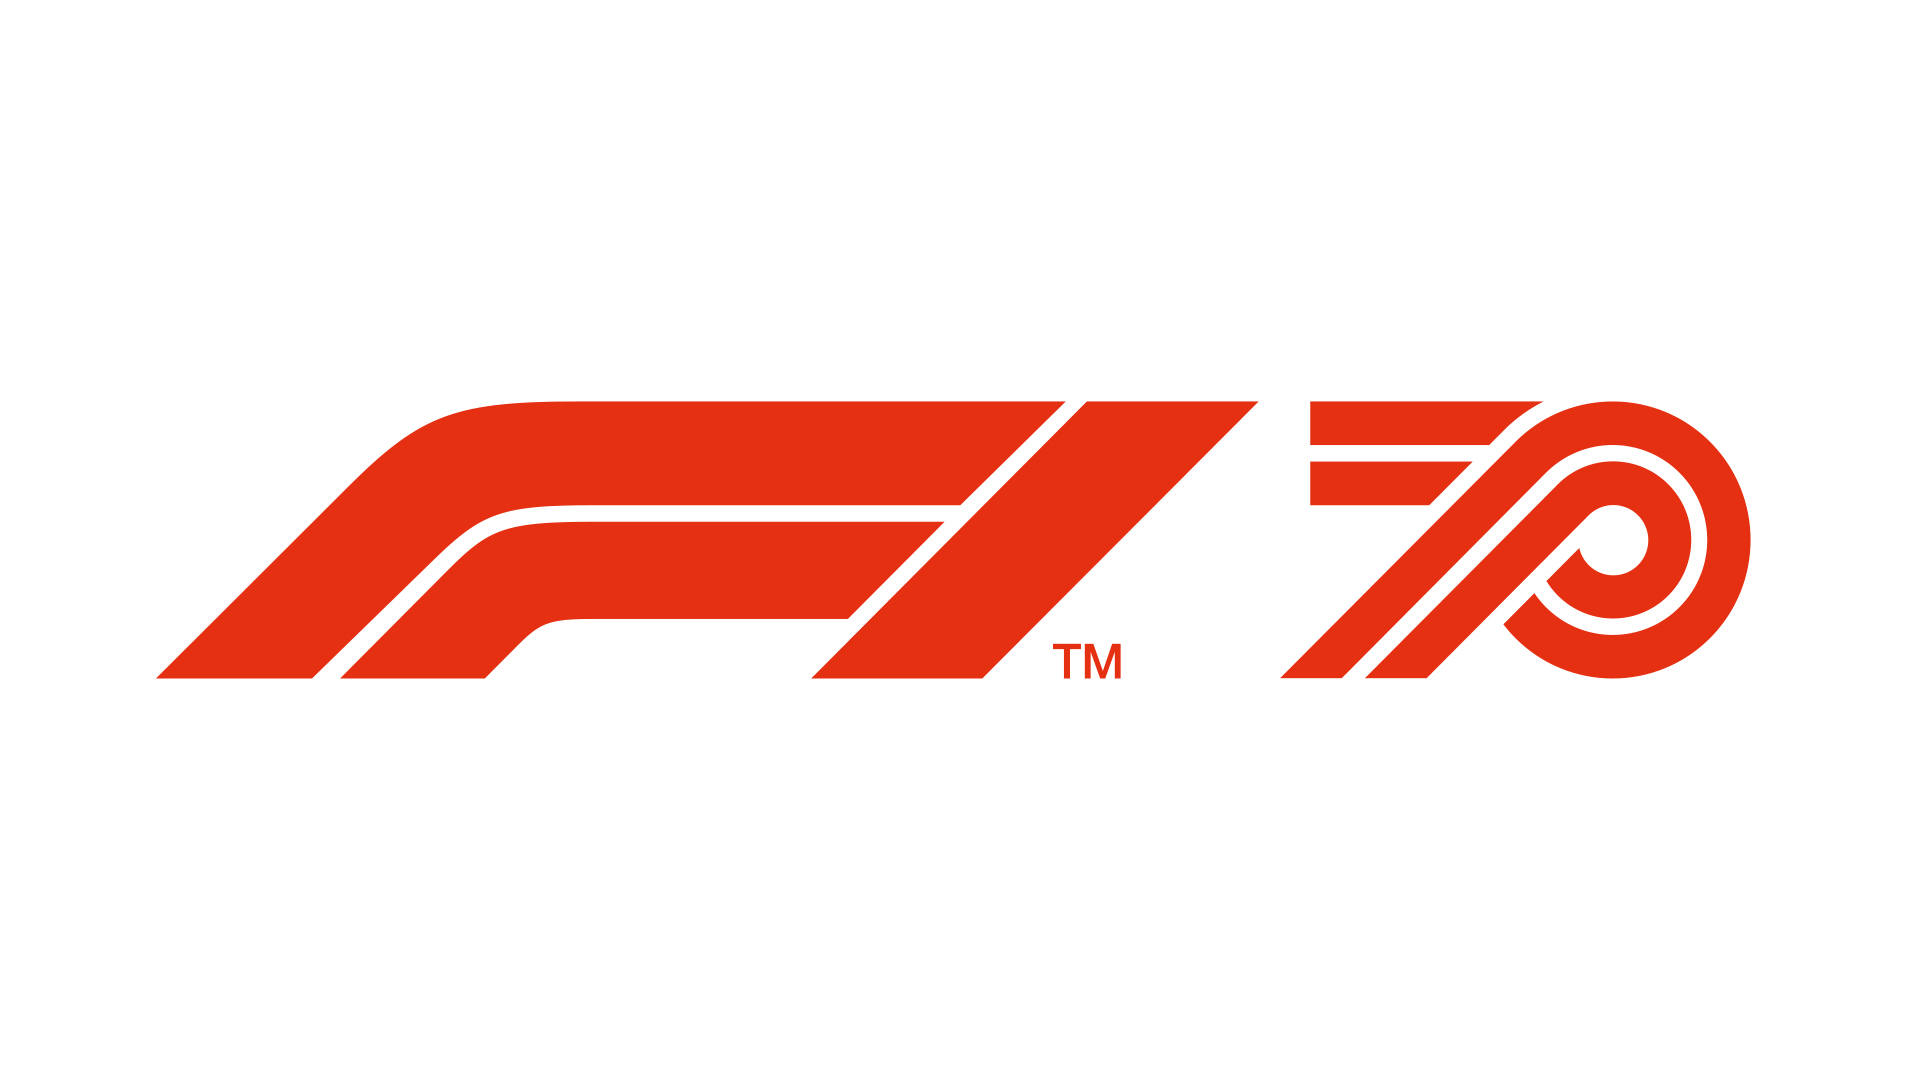 Formule1 2021 GP07 Frankrijk Eerste Vrije Training DUTCH 1080p HDTV x264-DTOD